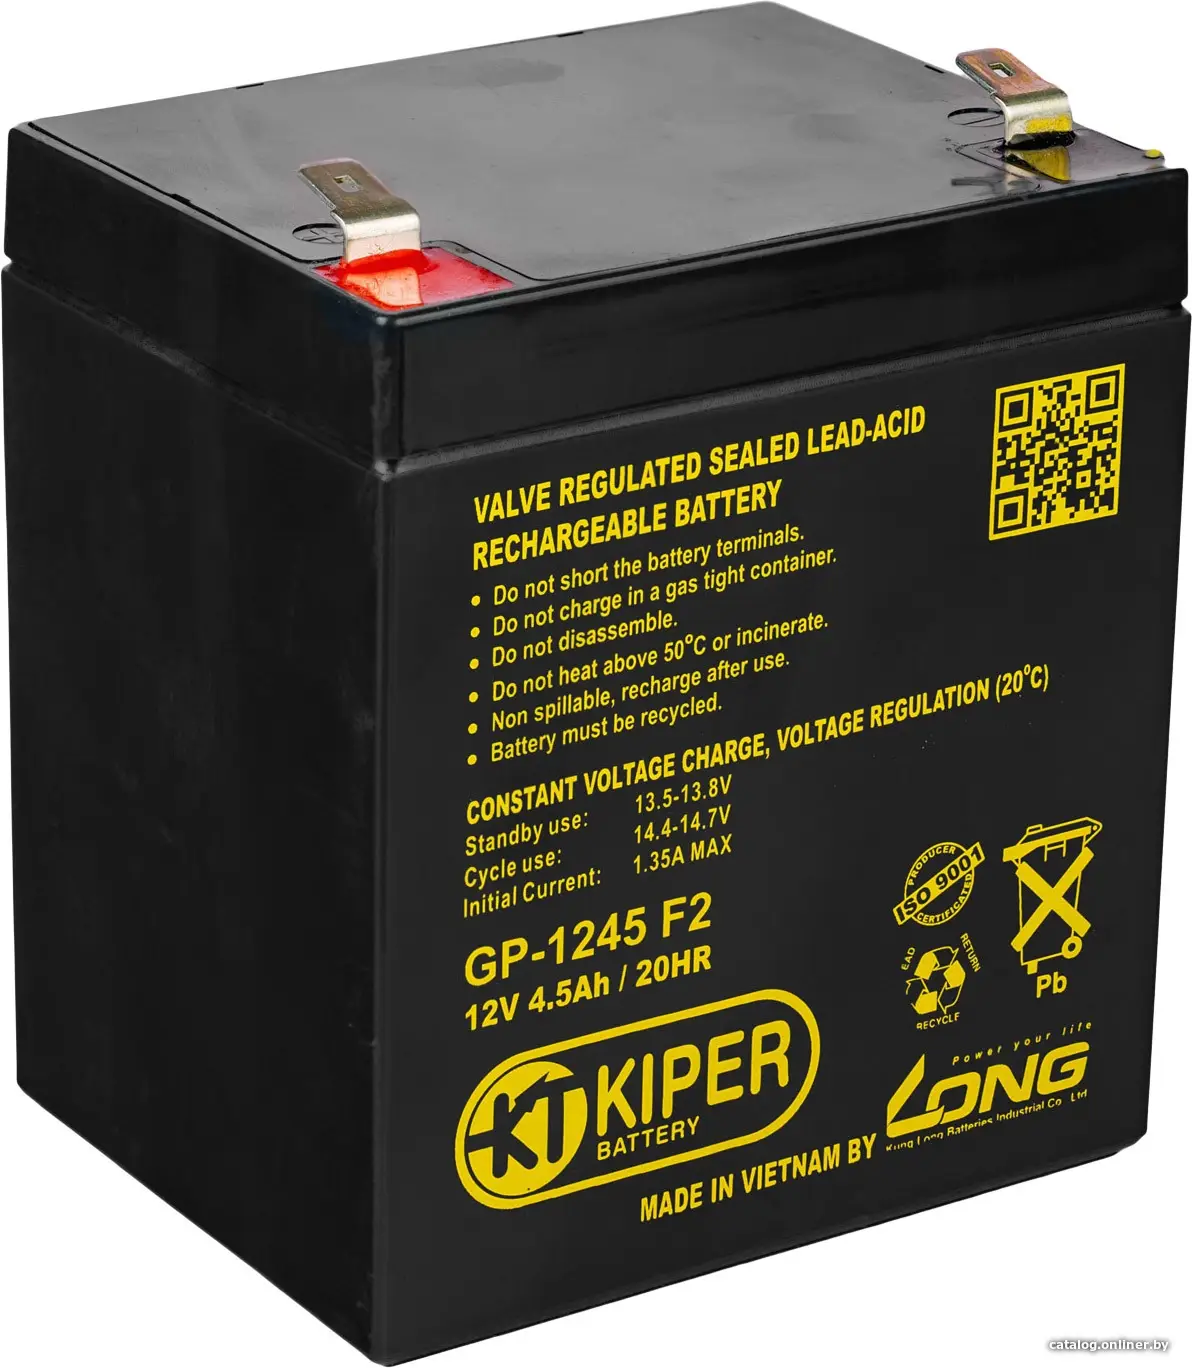 Купить Аккумуляторная батарея Kiper GP-1245 F2 12V/4.5Ah, цена, опт и розница